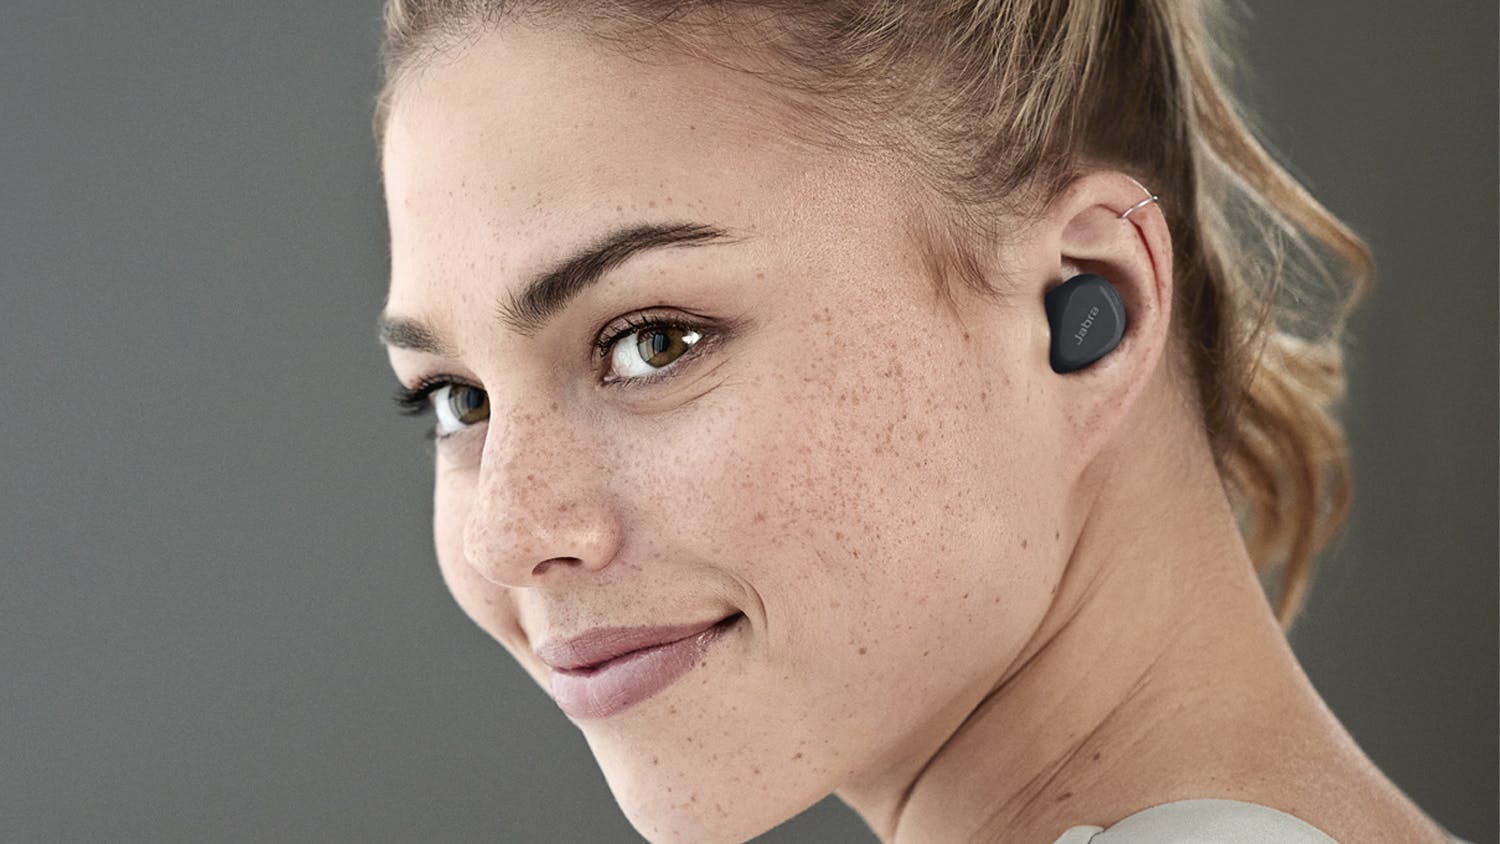 Jabra Elite 4 Active Noise Cancelling True Wireless In-Ear Headphones - Black